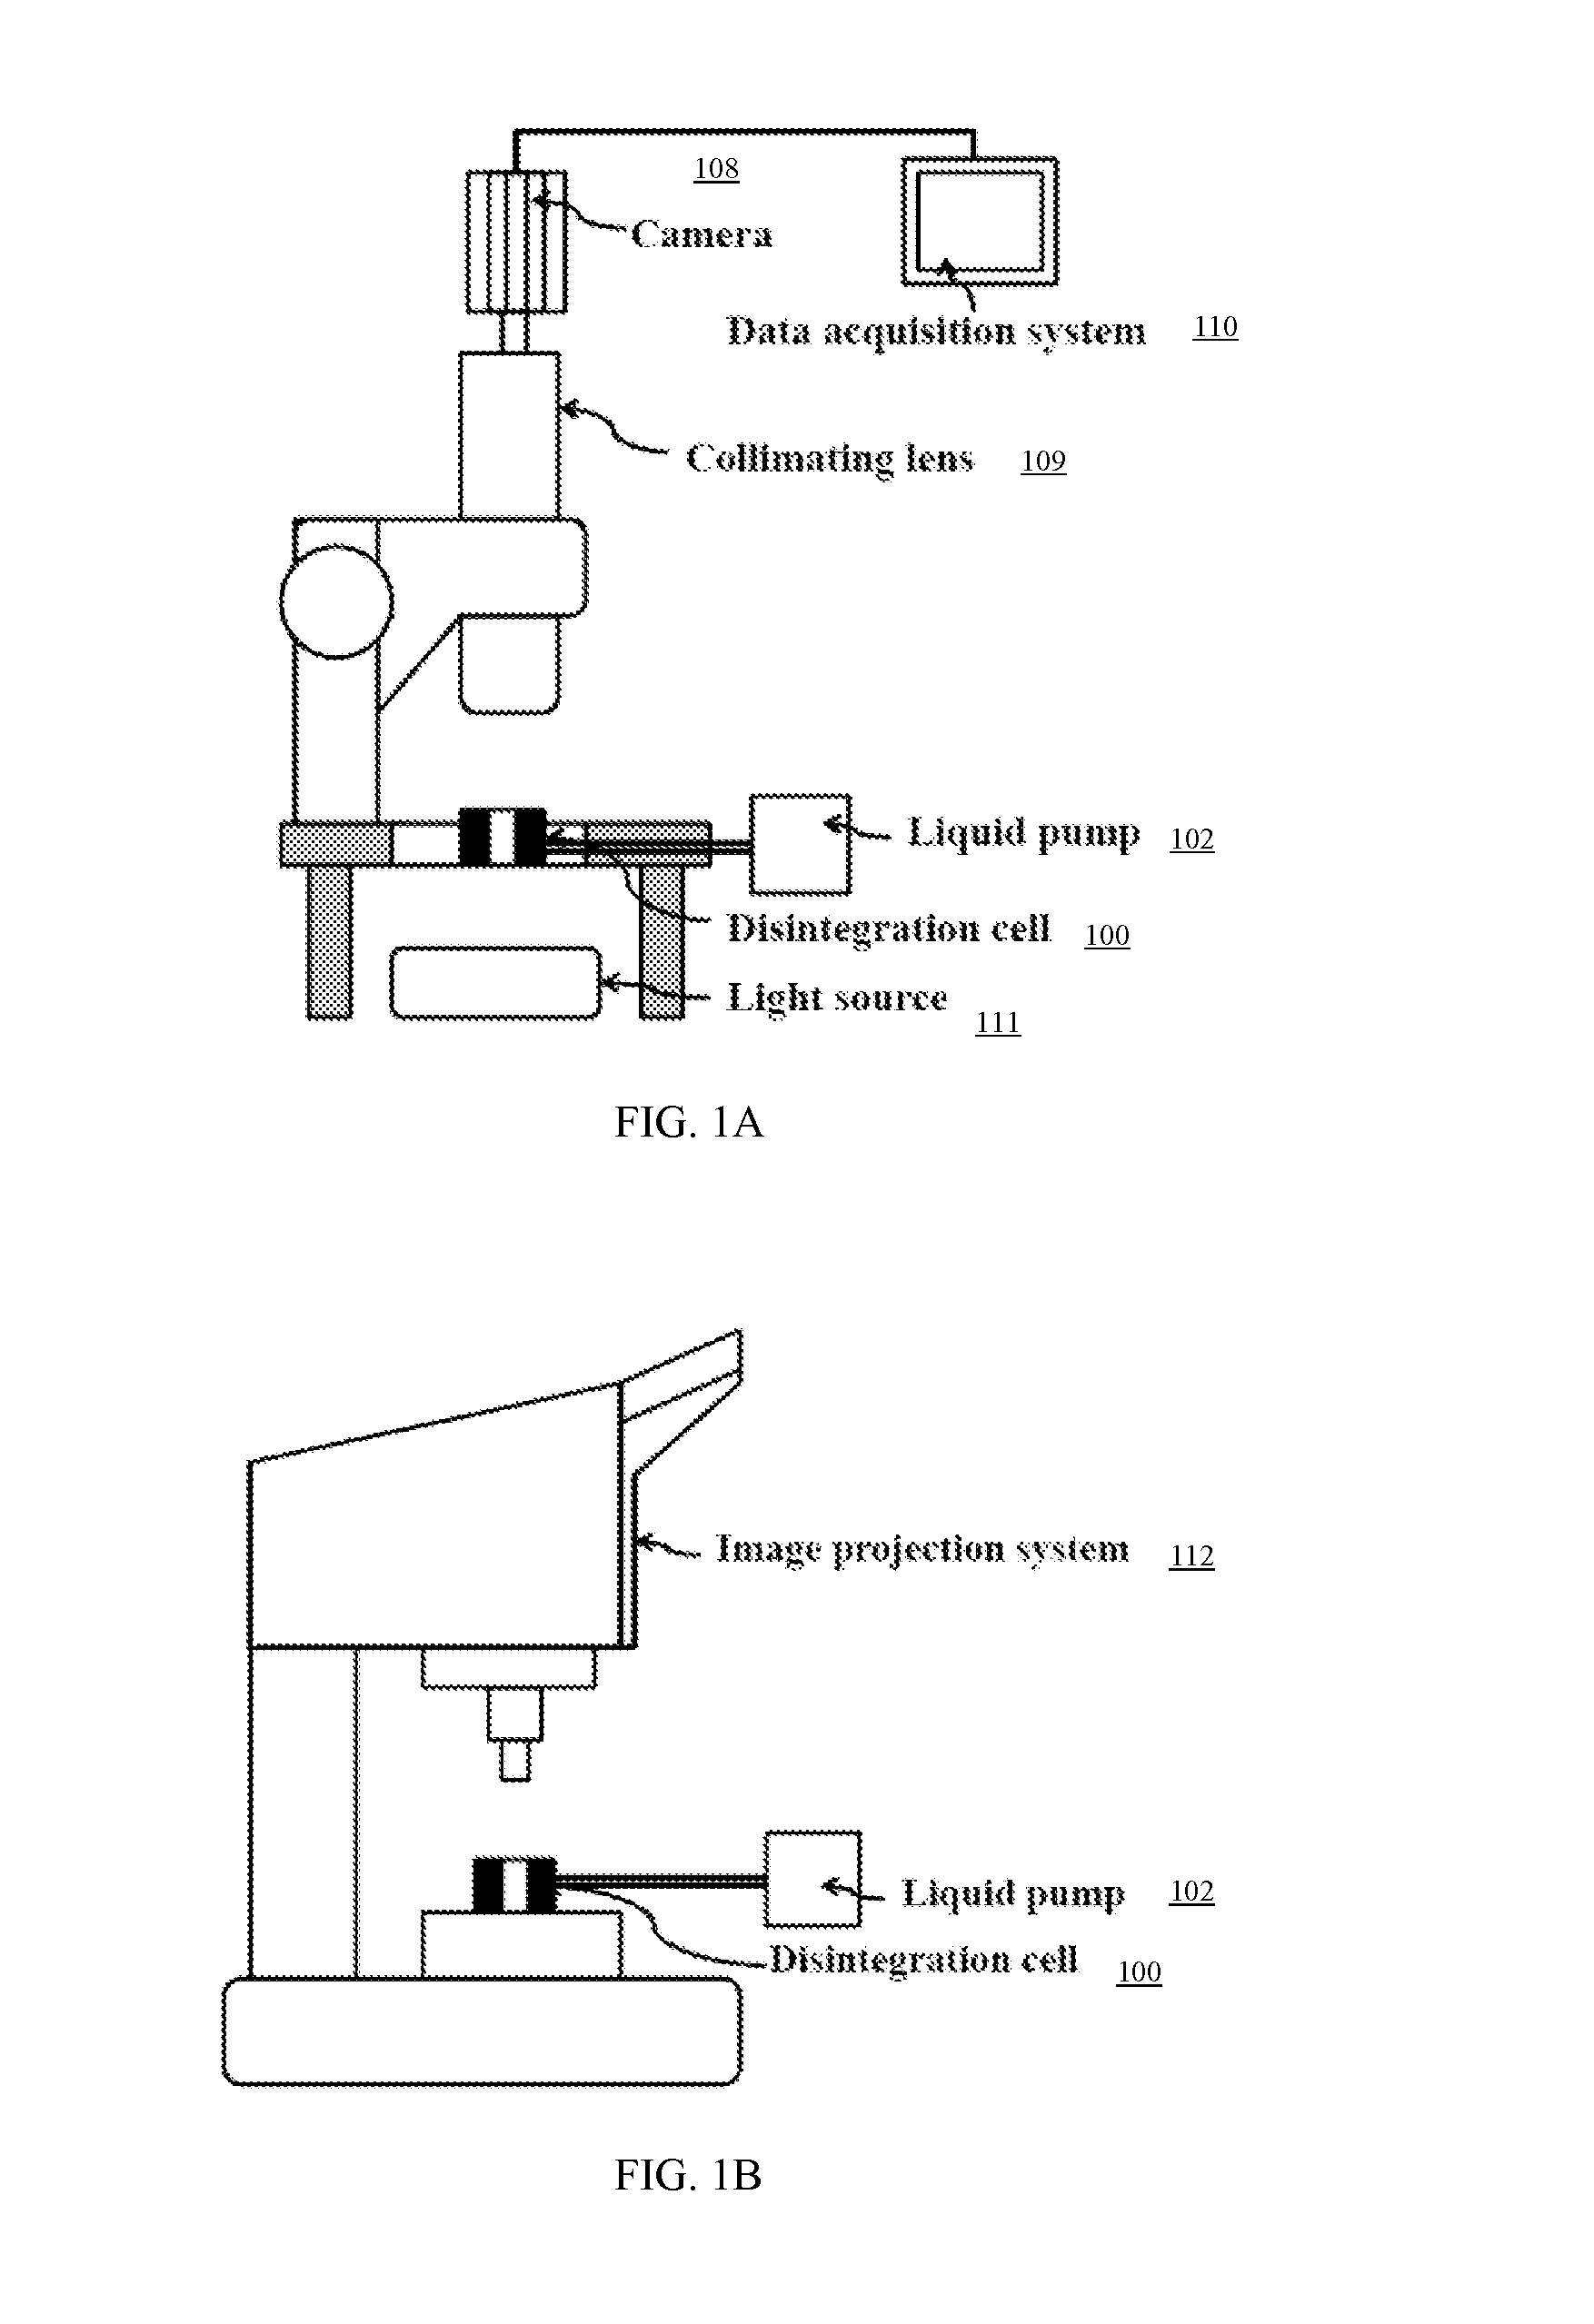 Apparatus and method for visiometric disintegration